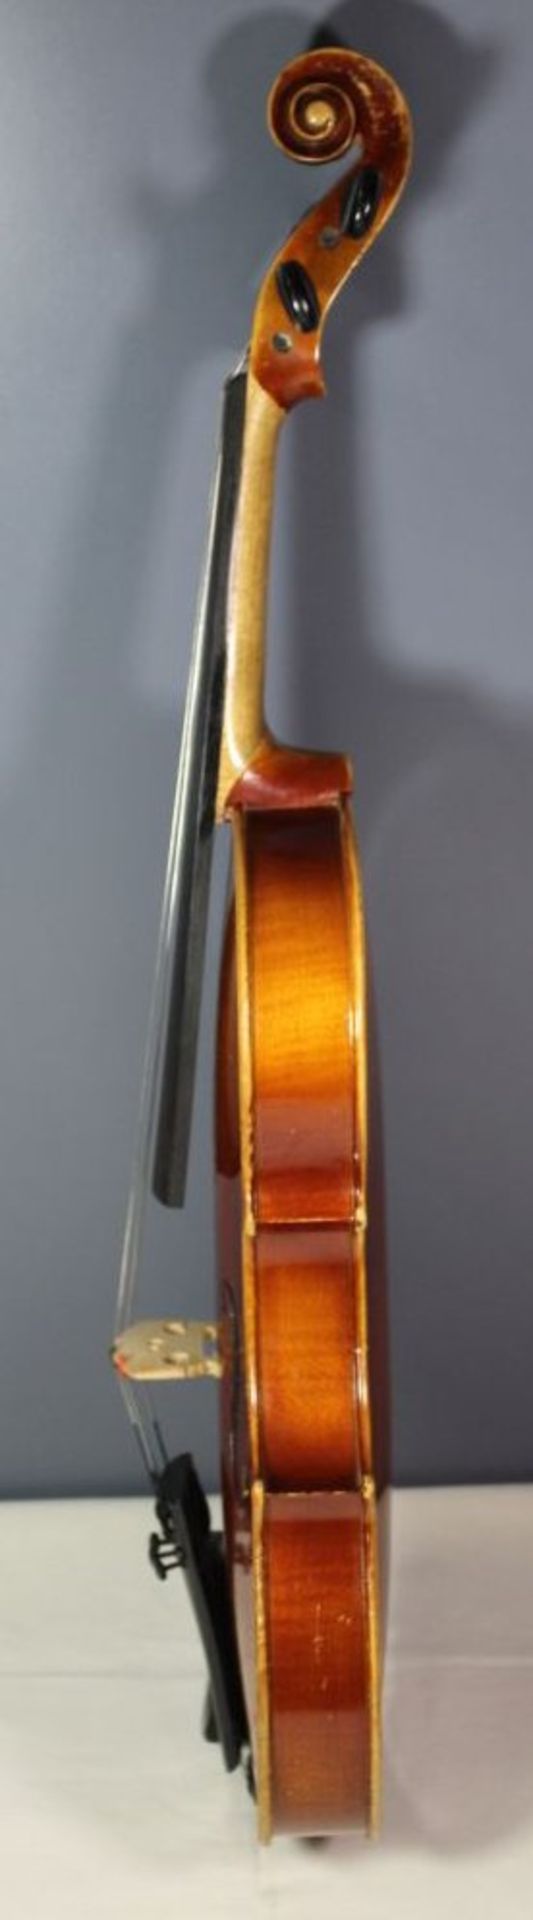 Geige, innen Klebeetikett " Antonius Stradivarius faciebat Cremona 1713", Made in W.-Germany, - Bild 2 aus 10